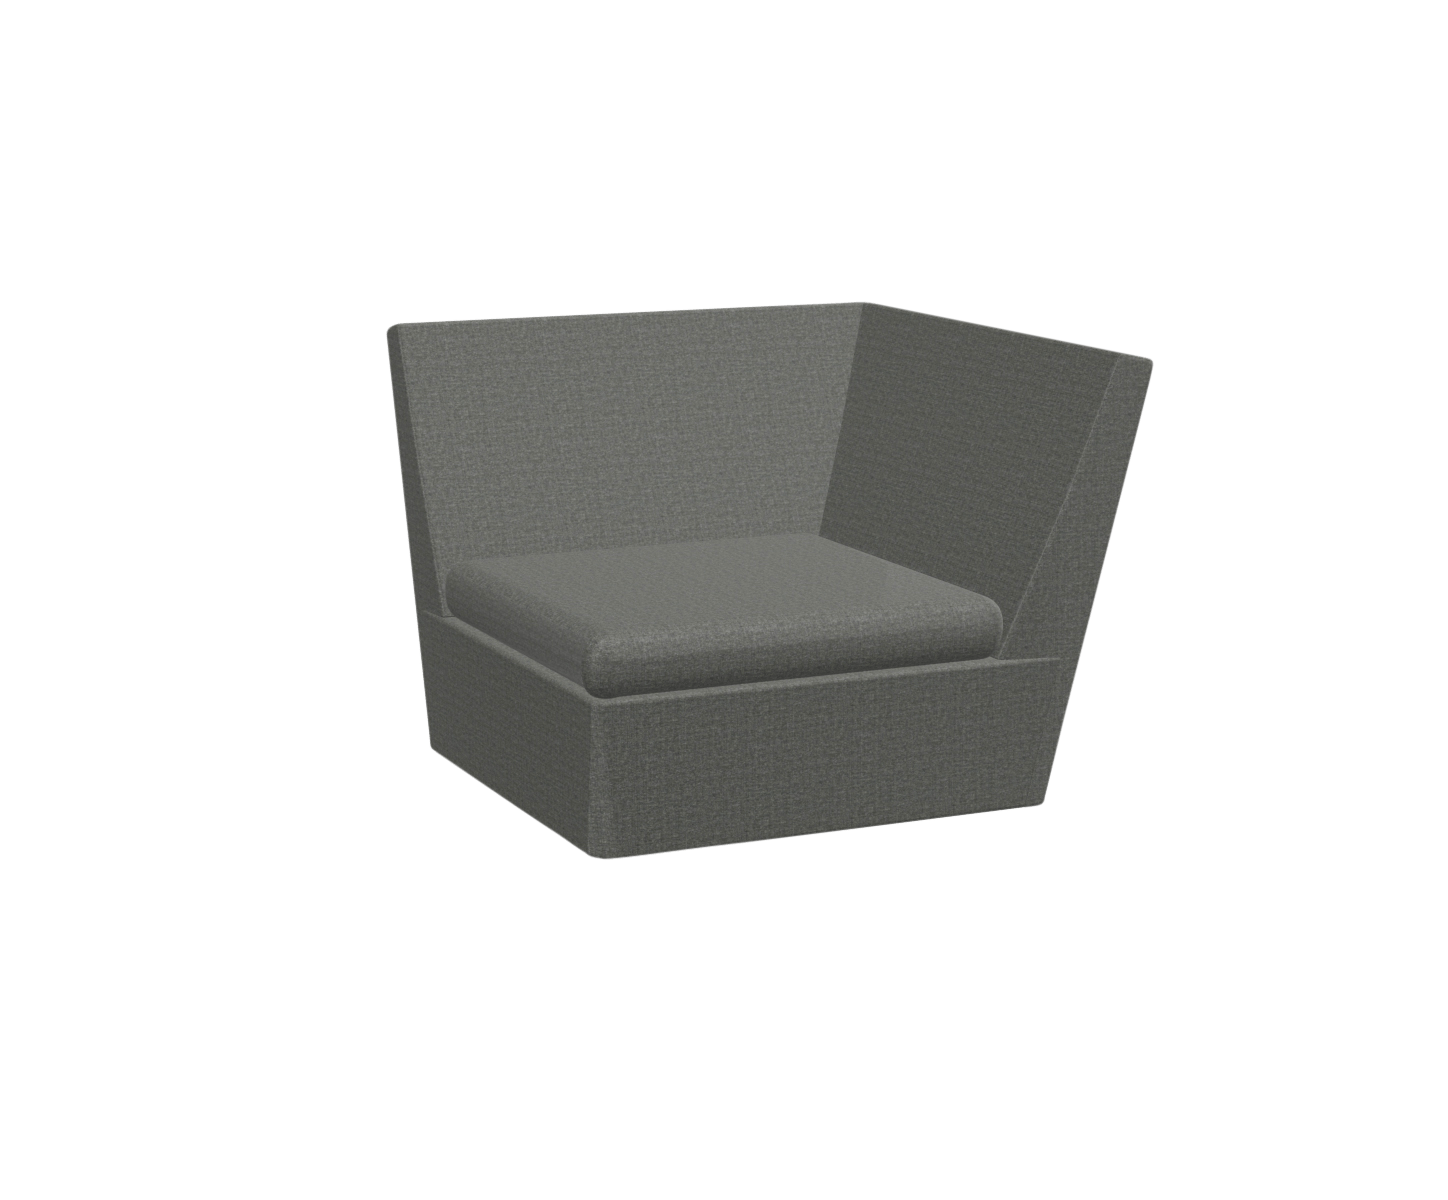 grey corner section of a modular seating sofa